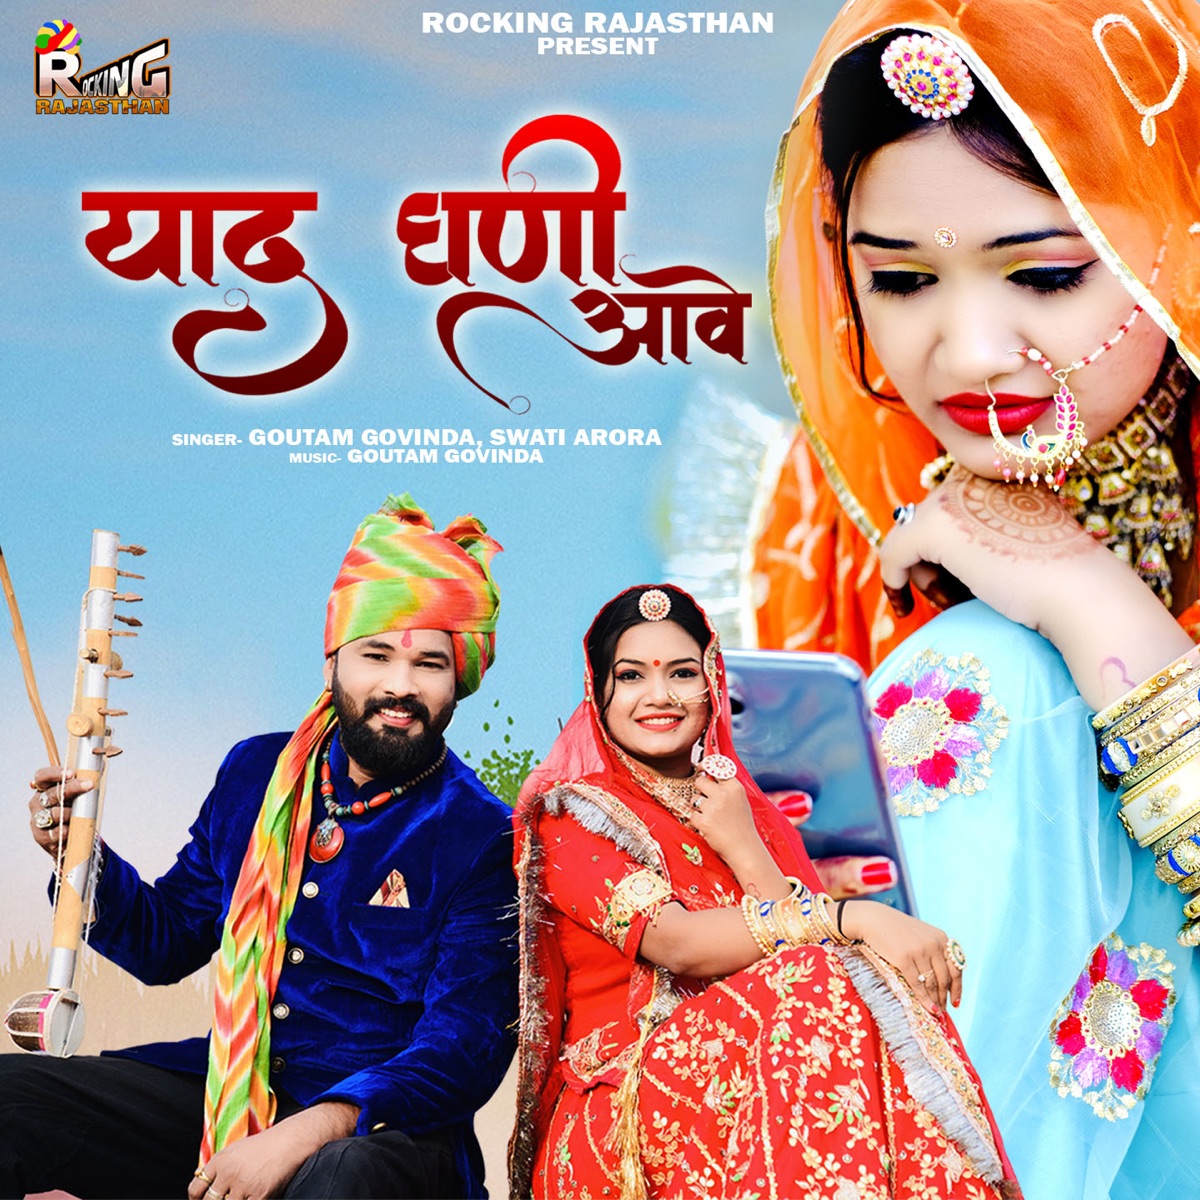 45+ Punjabi Wedding Dance Songs To Download - Latest 2021 Songs | WedMeGood